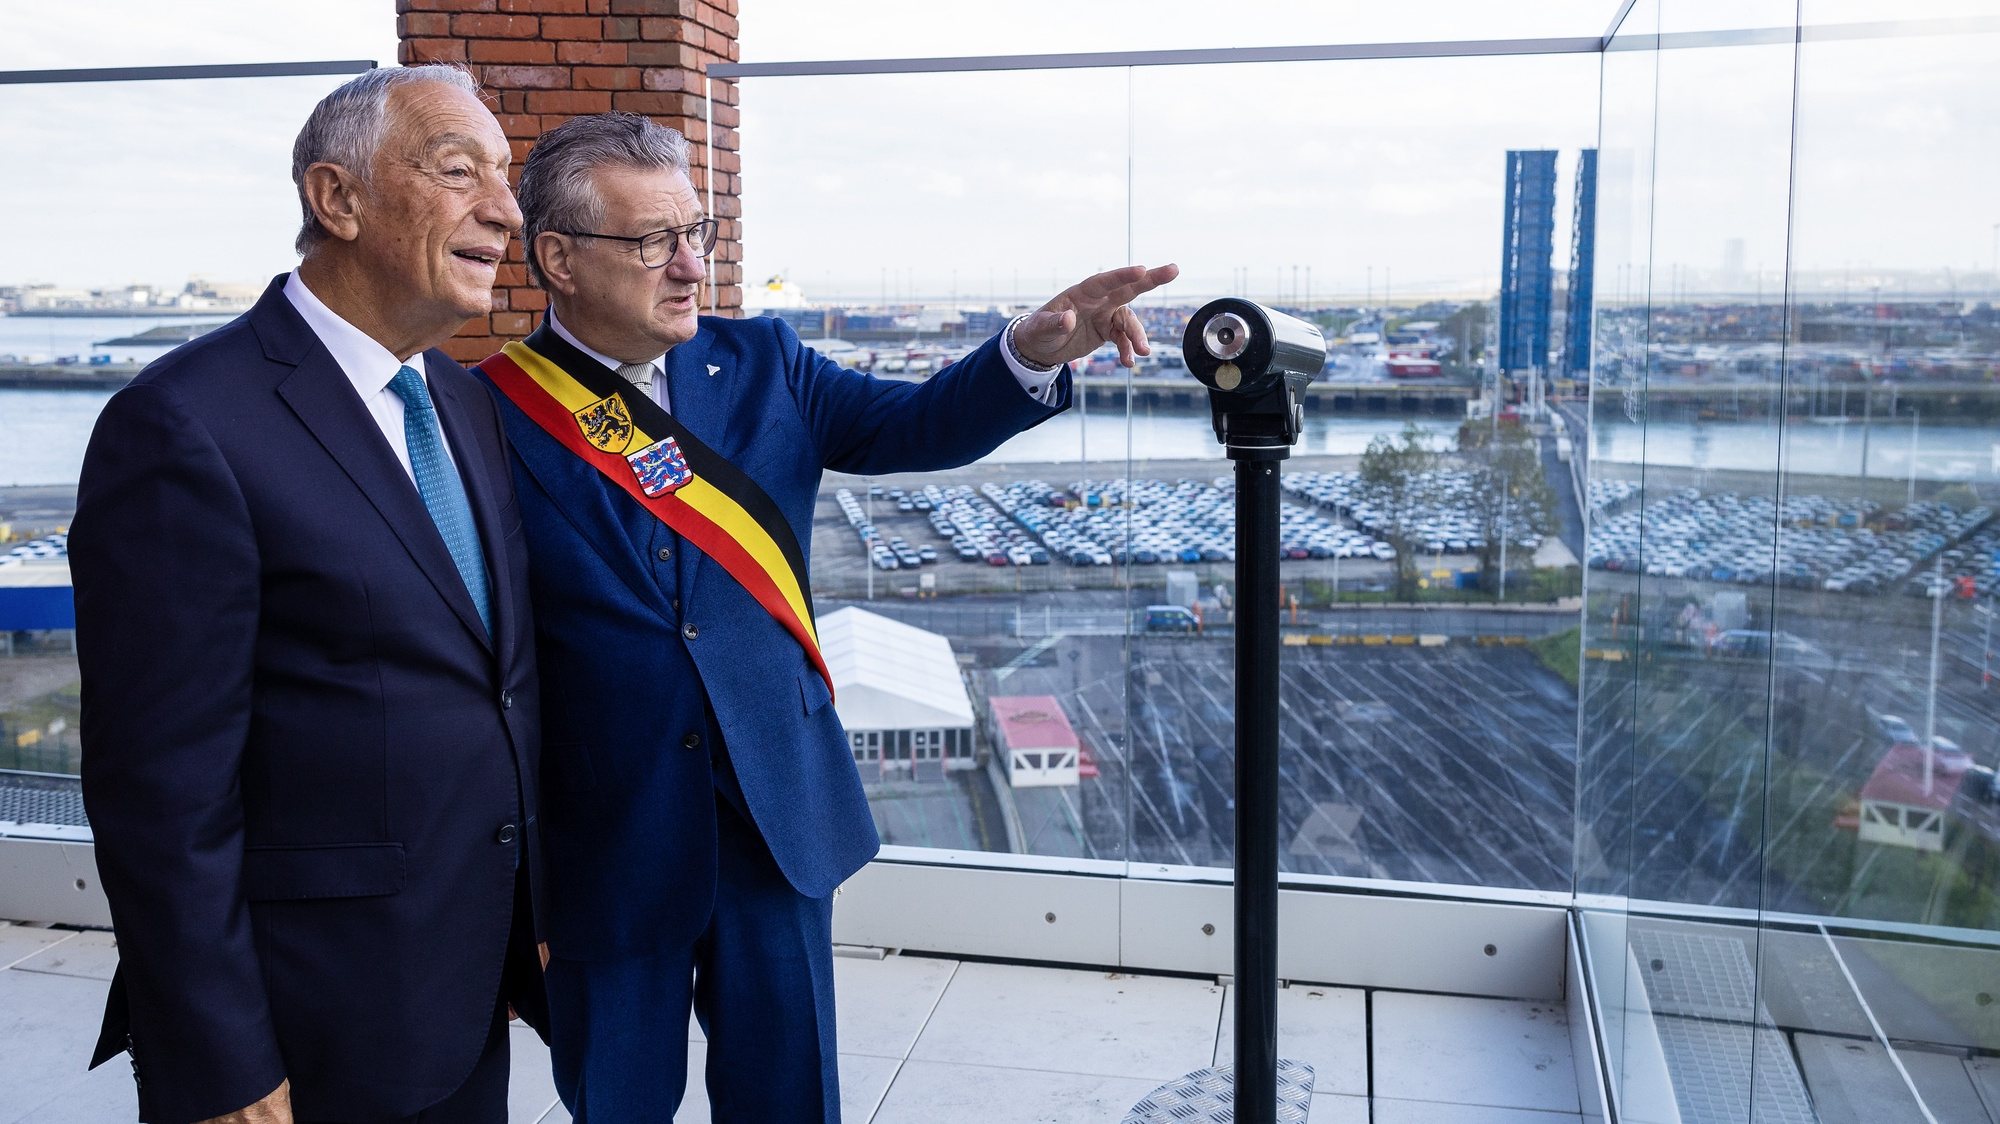 Portuguese President Marcelo Rebelo de Sousa (L) accompanied by Mayor of Brugge Dirk De fauw (R) during a visit to Zeebrugge port, Brugge, Belgium, 19 October 2023. JOSE COELHO/LUSA